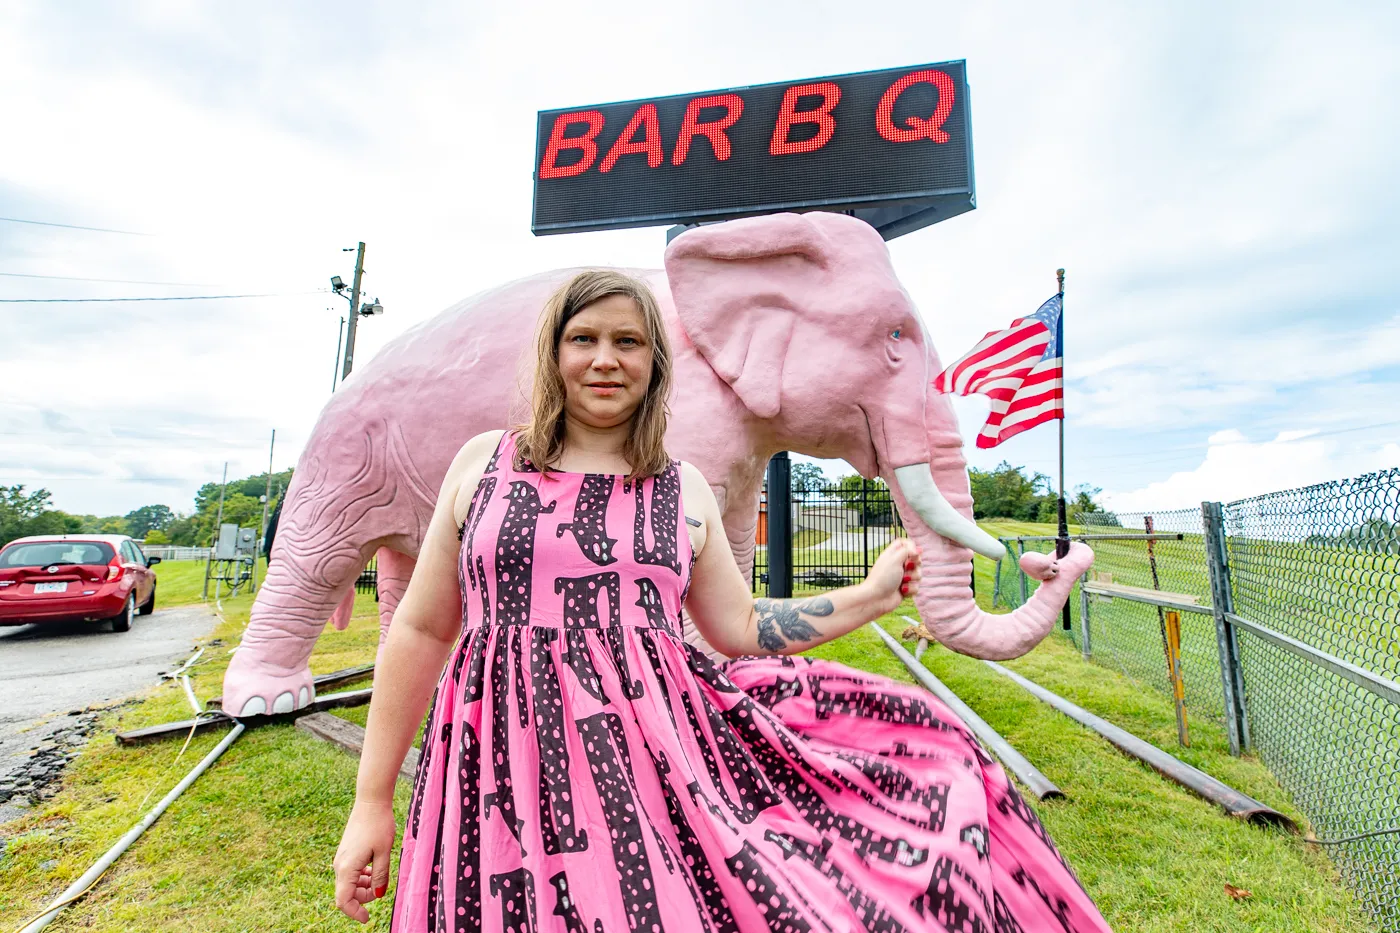 Big Pink Elephant statue in Fenton, Missouri roadside attraction